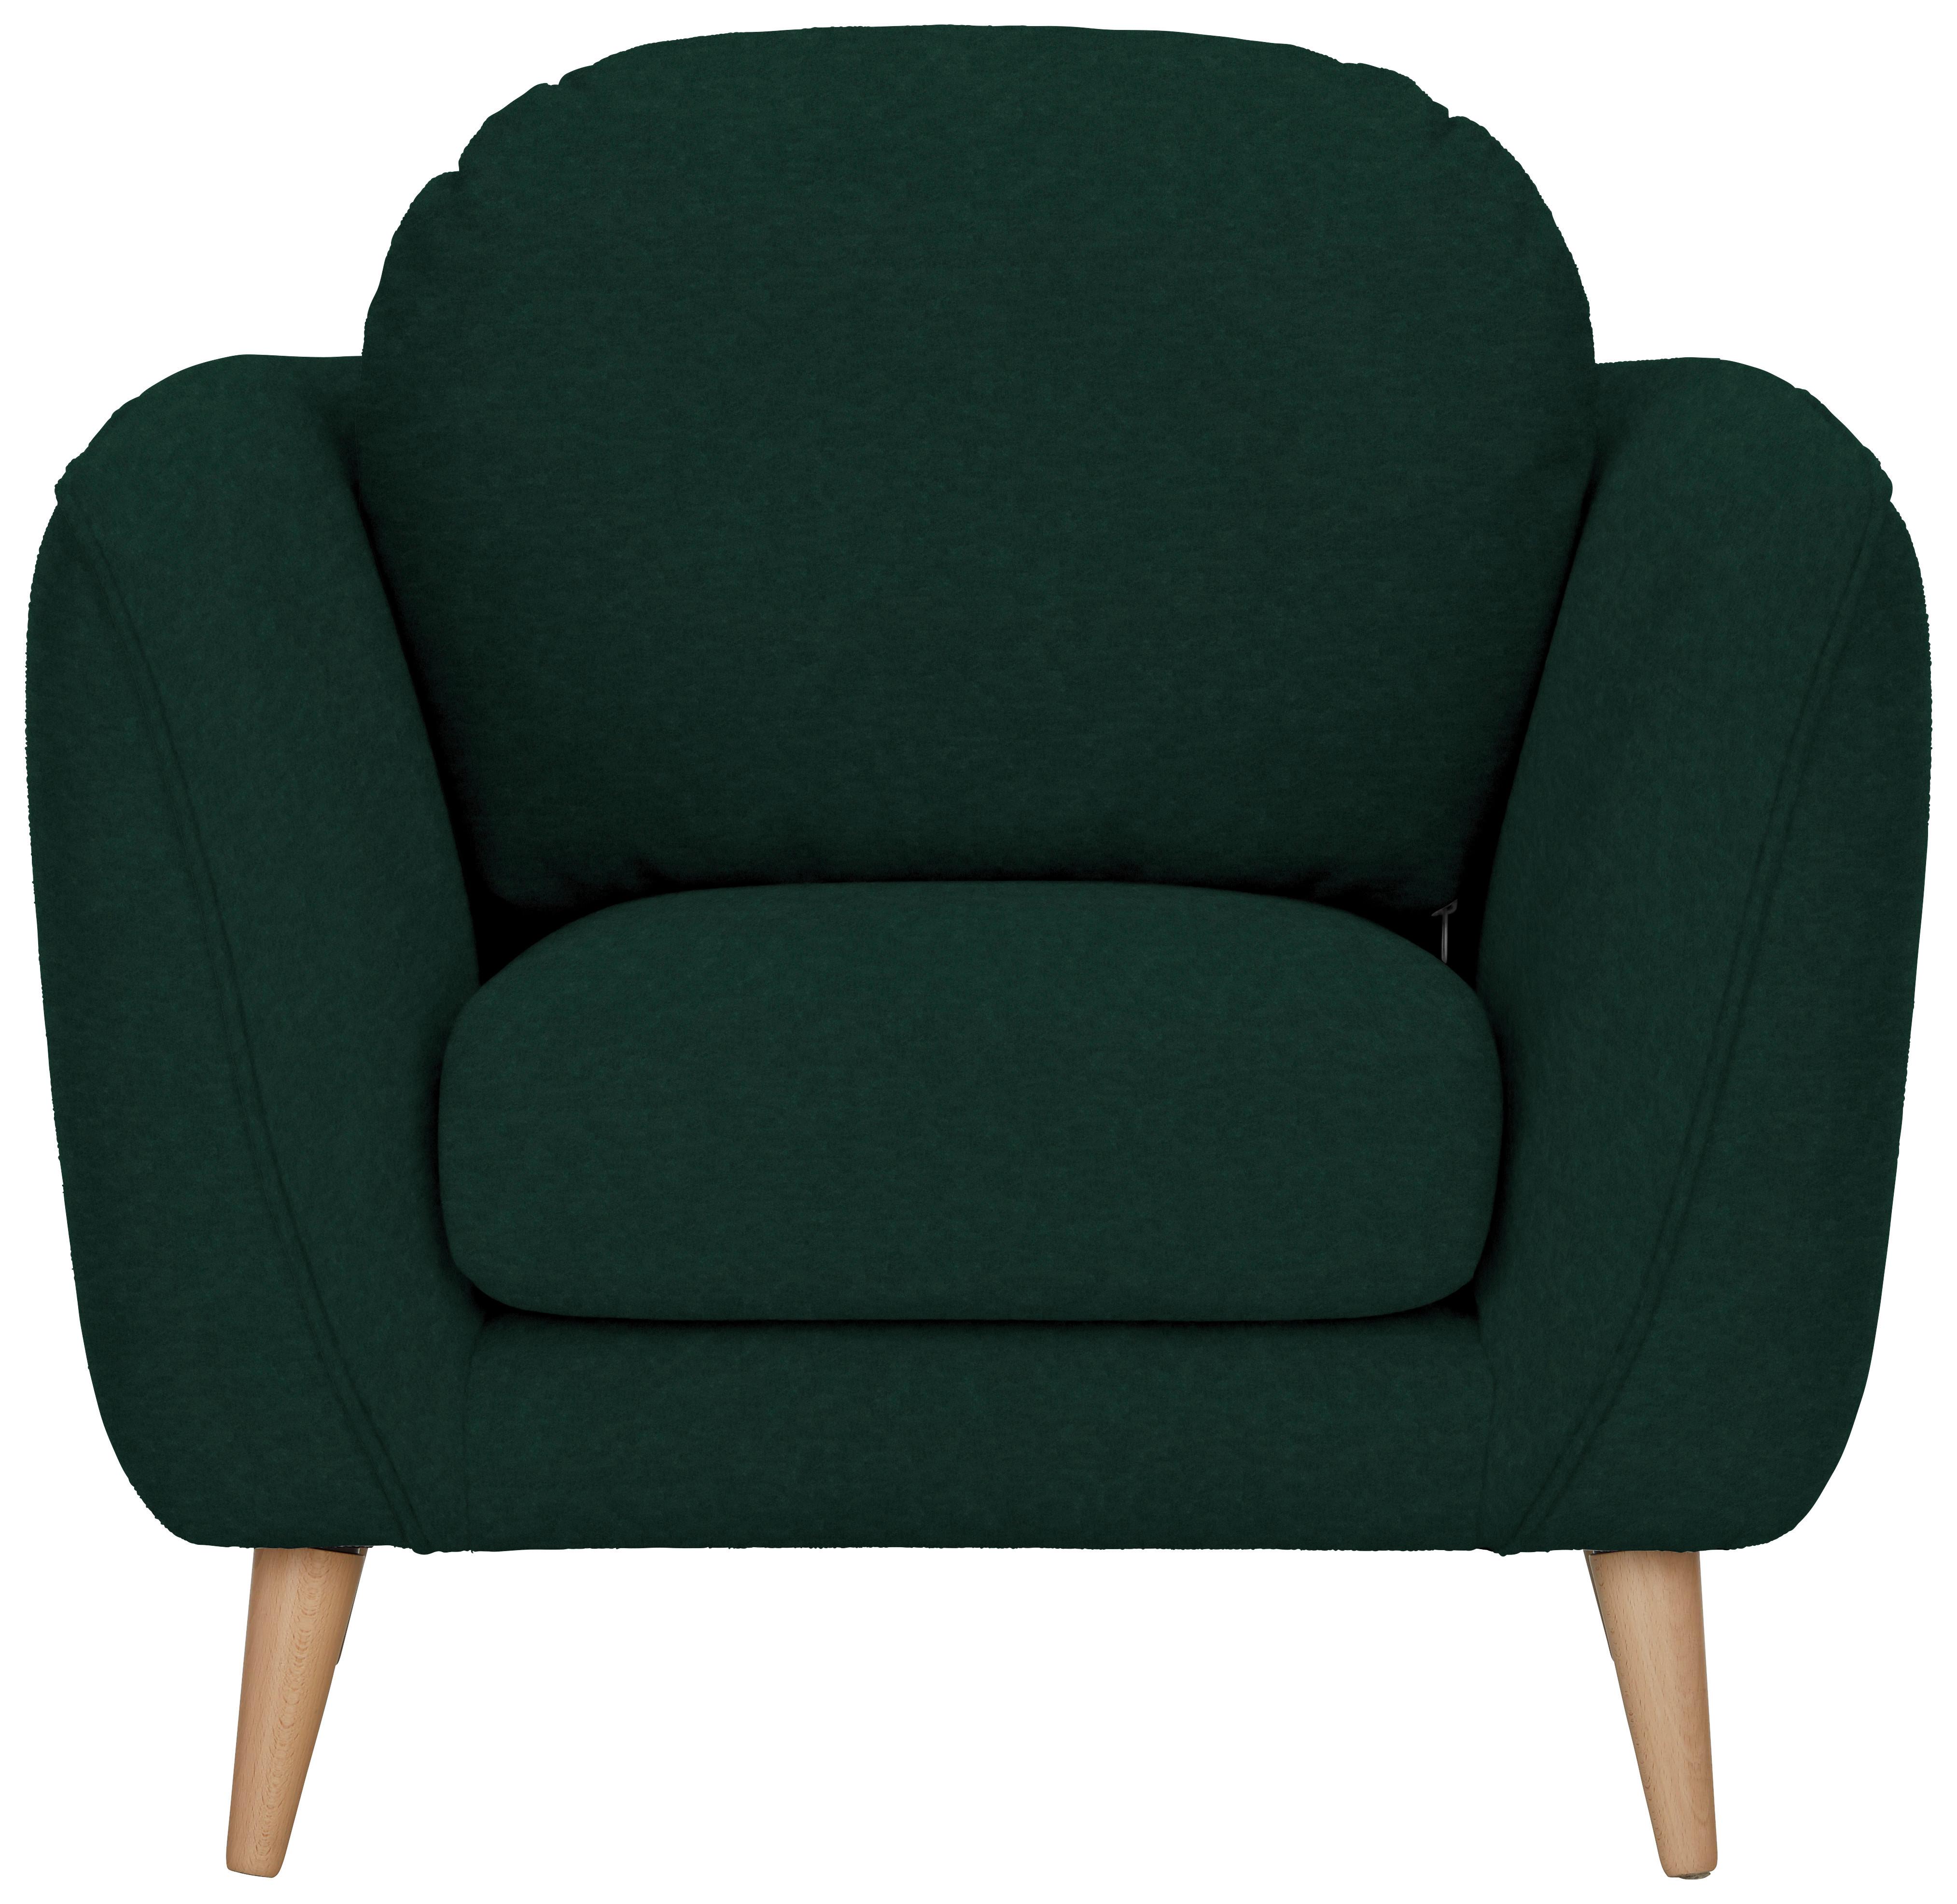 Fotelja Nicolo - zelena/prirodne boje, Konventionell, tekstil (98/70/47/97cm) - Zandiara